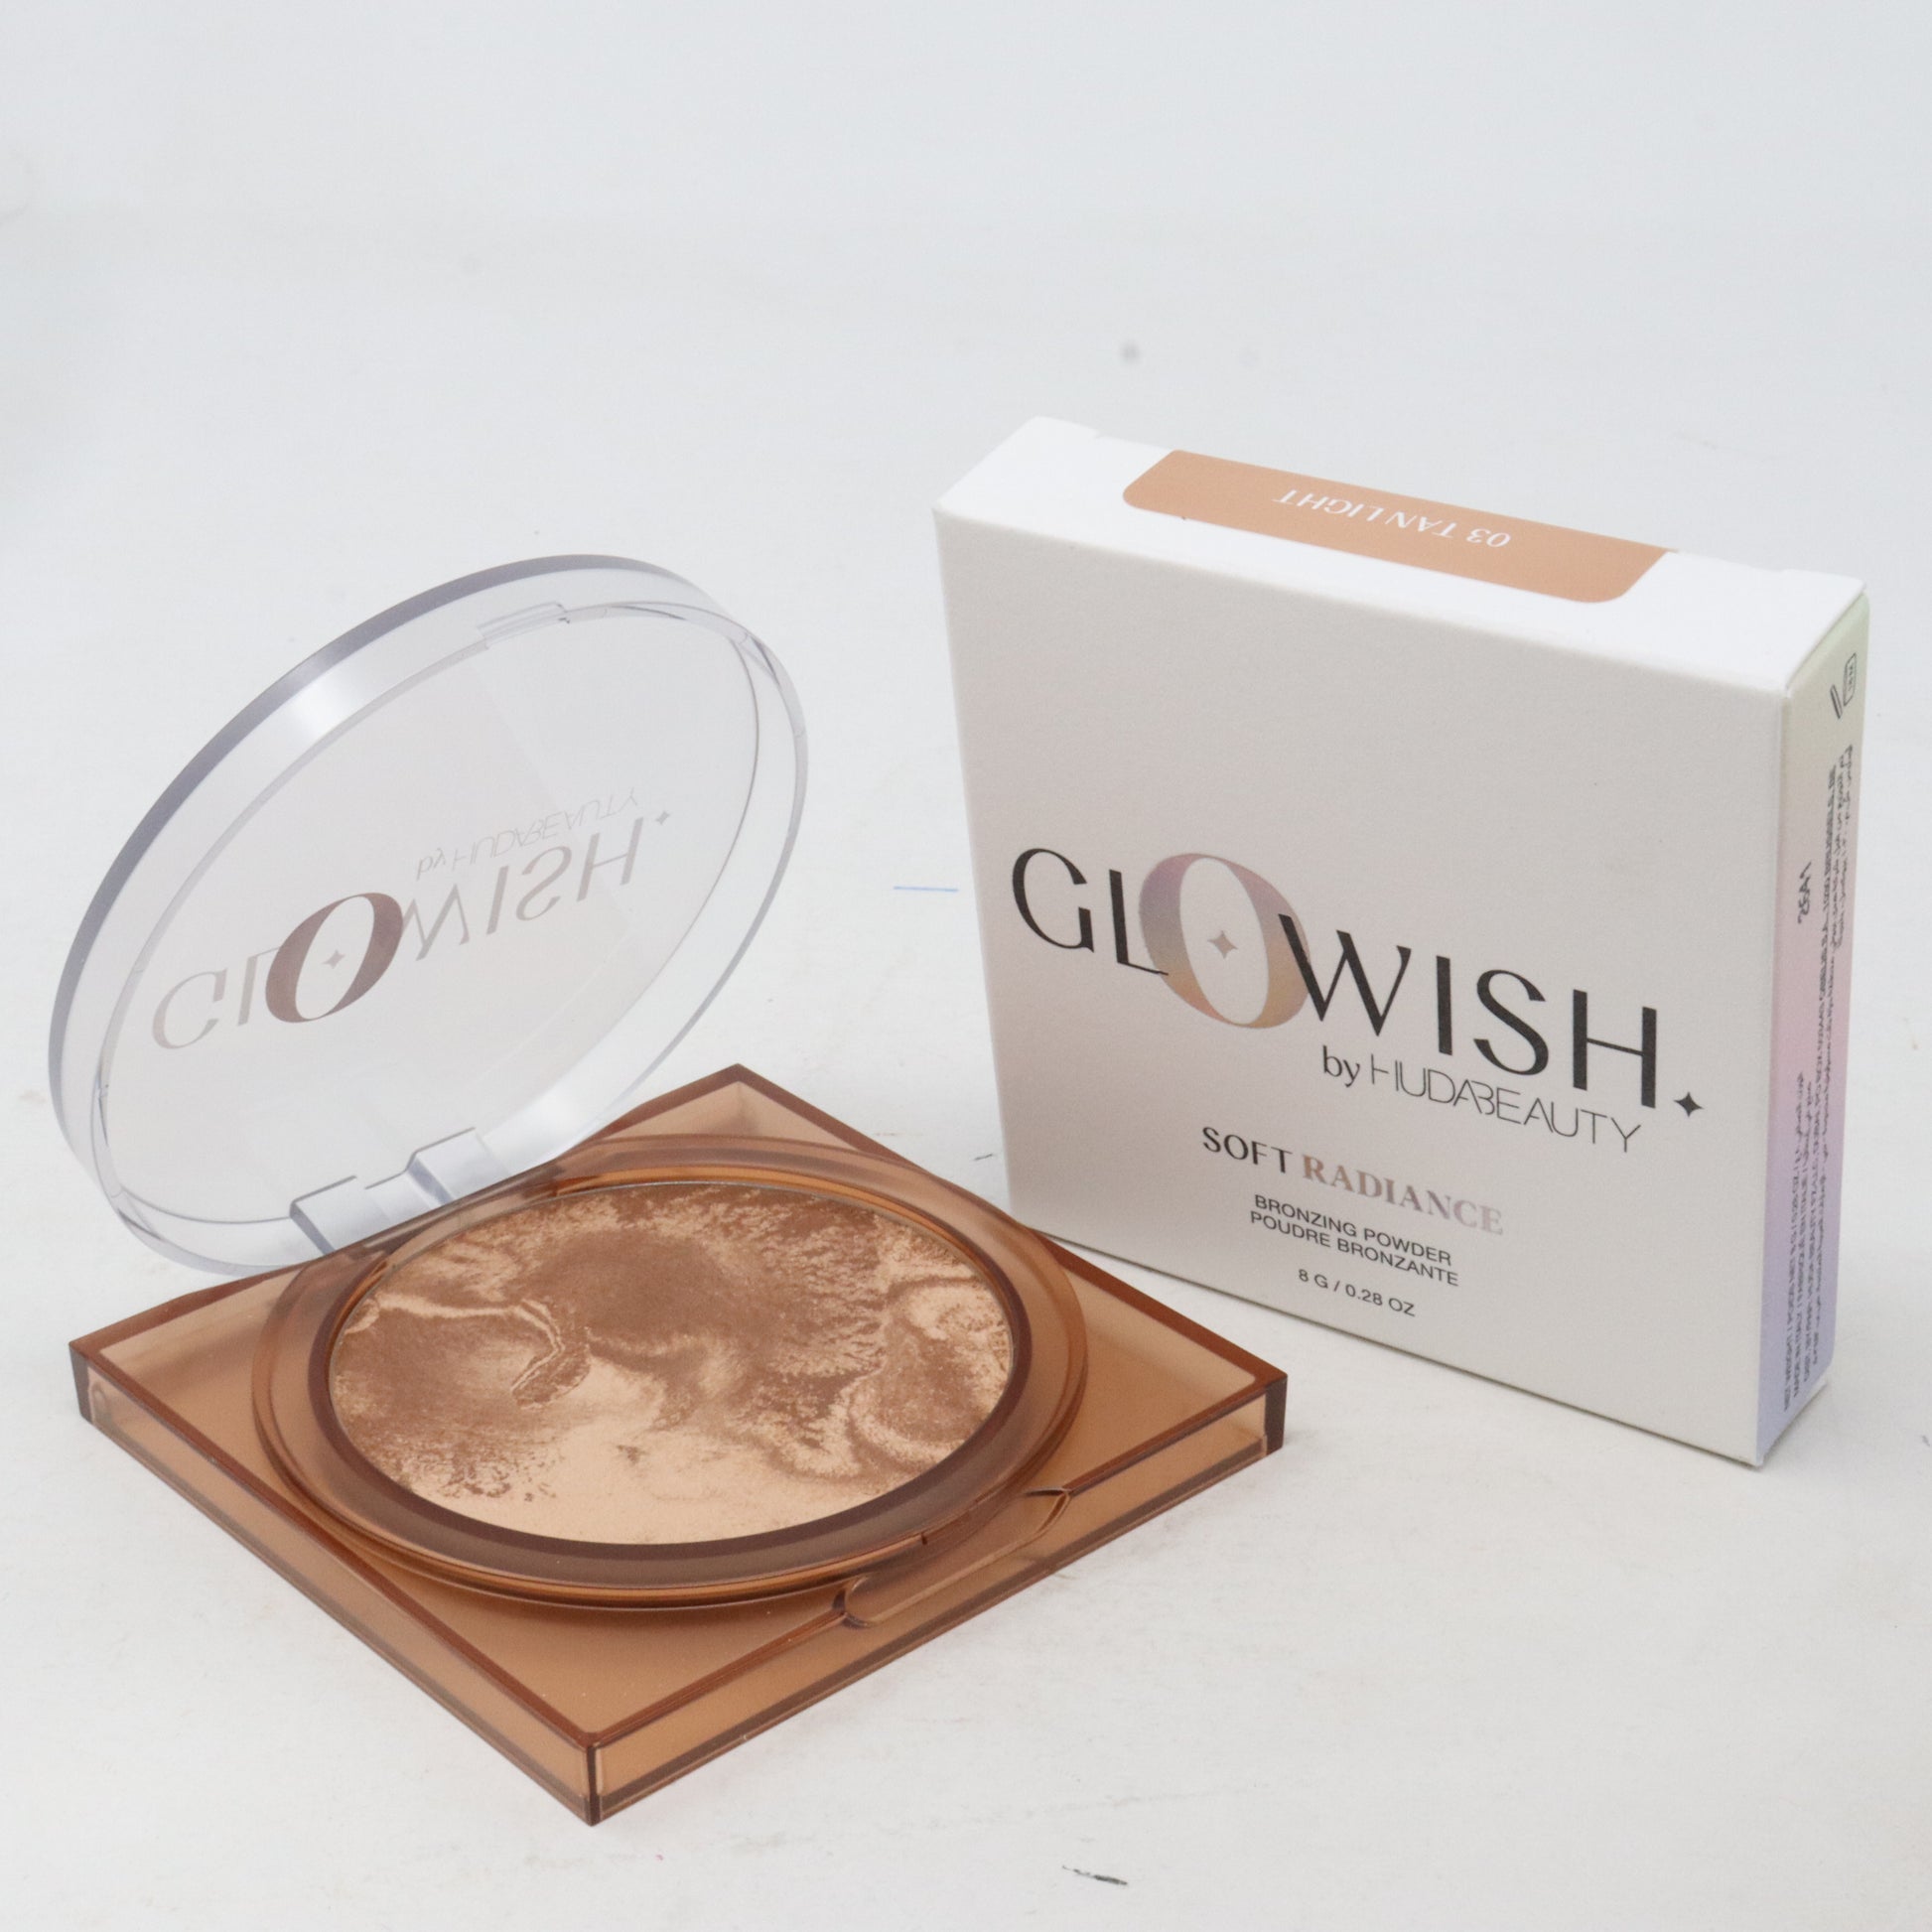 Glowish Soft Radiance Bronzing Powder 8 g